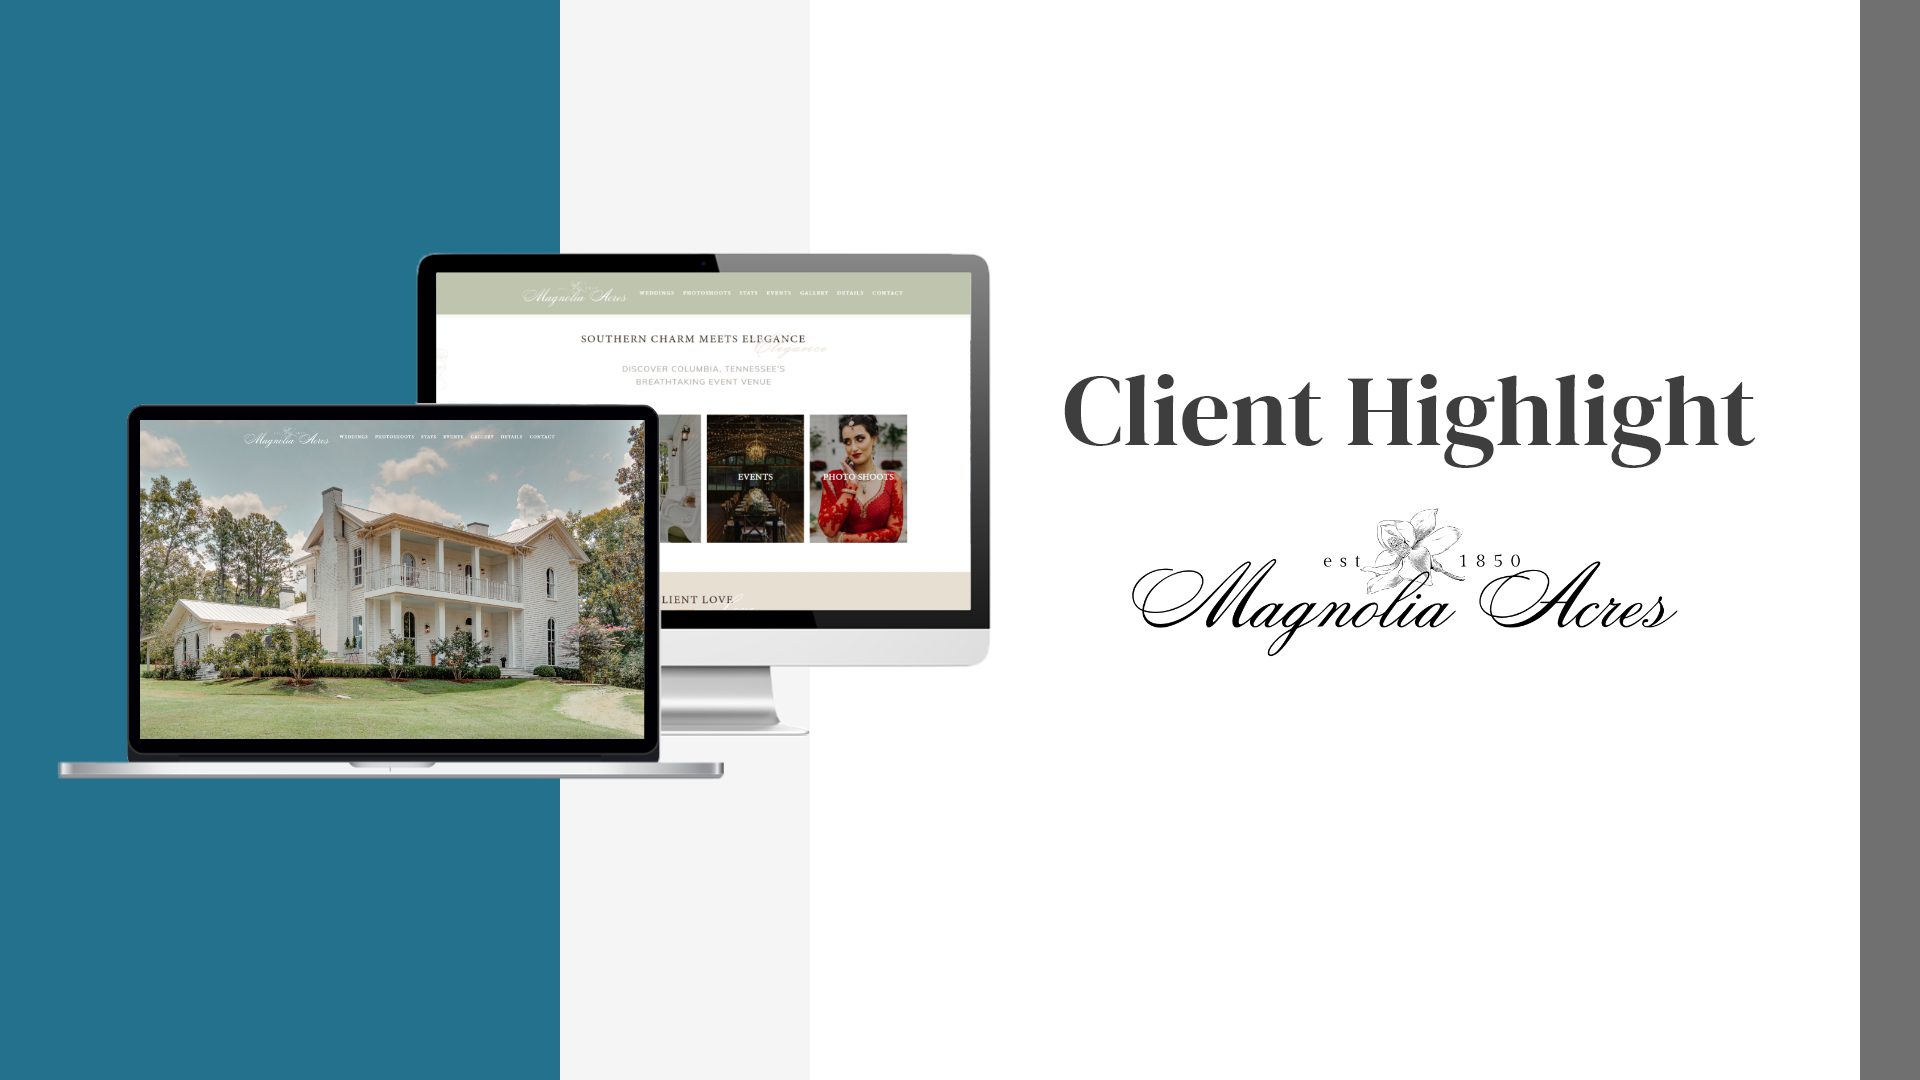 Client Highlight: Magnolia Acres